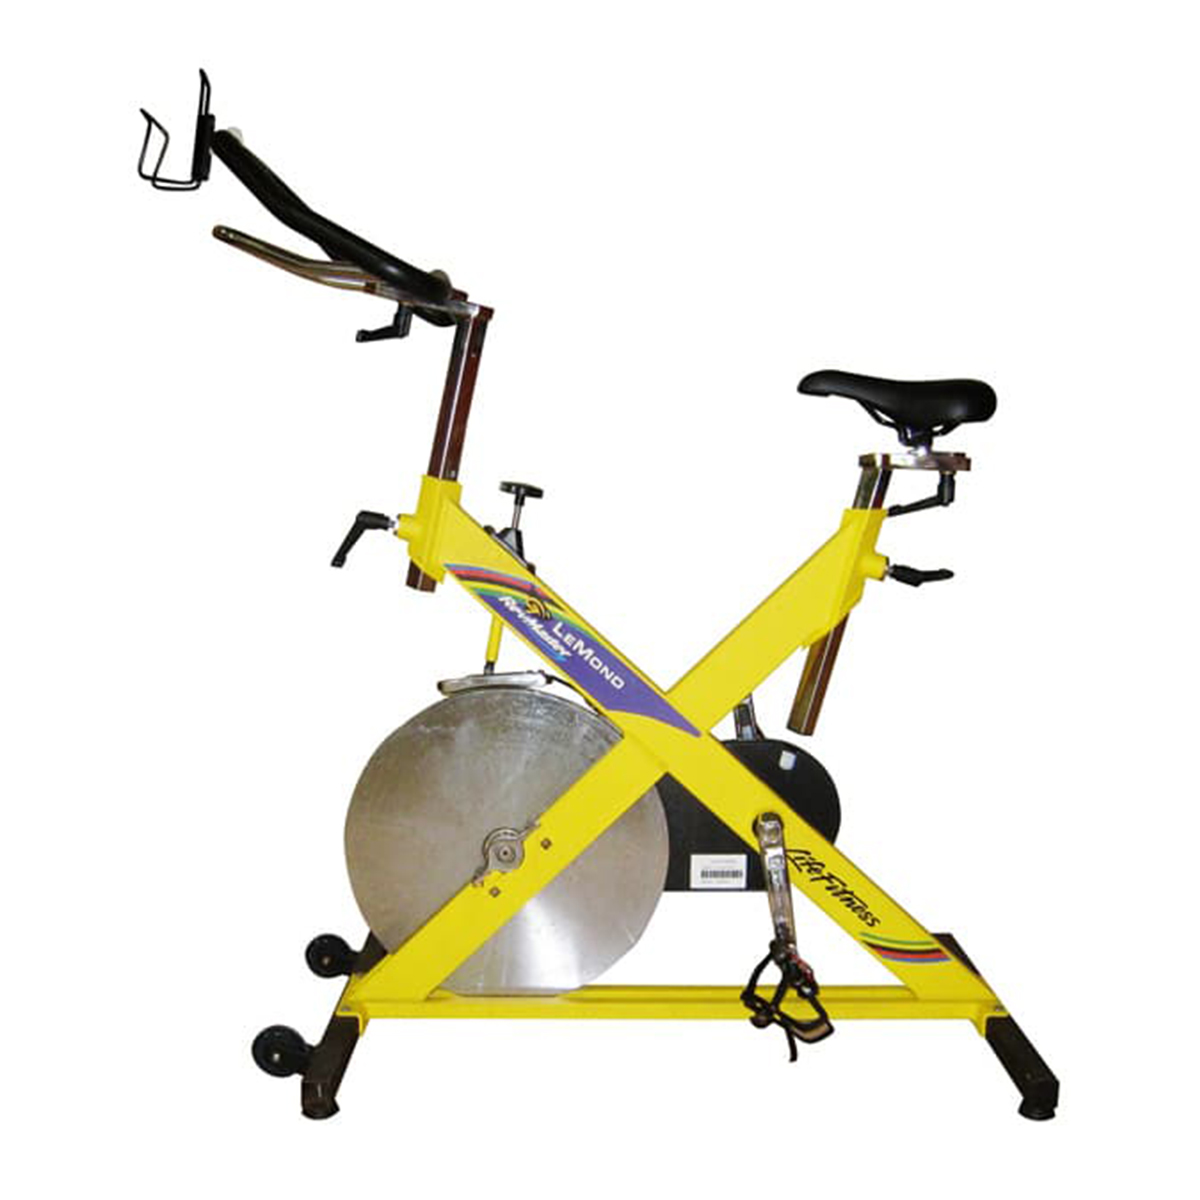 lemond revmaster pro spin bike